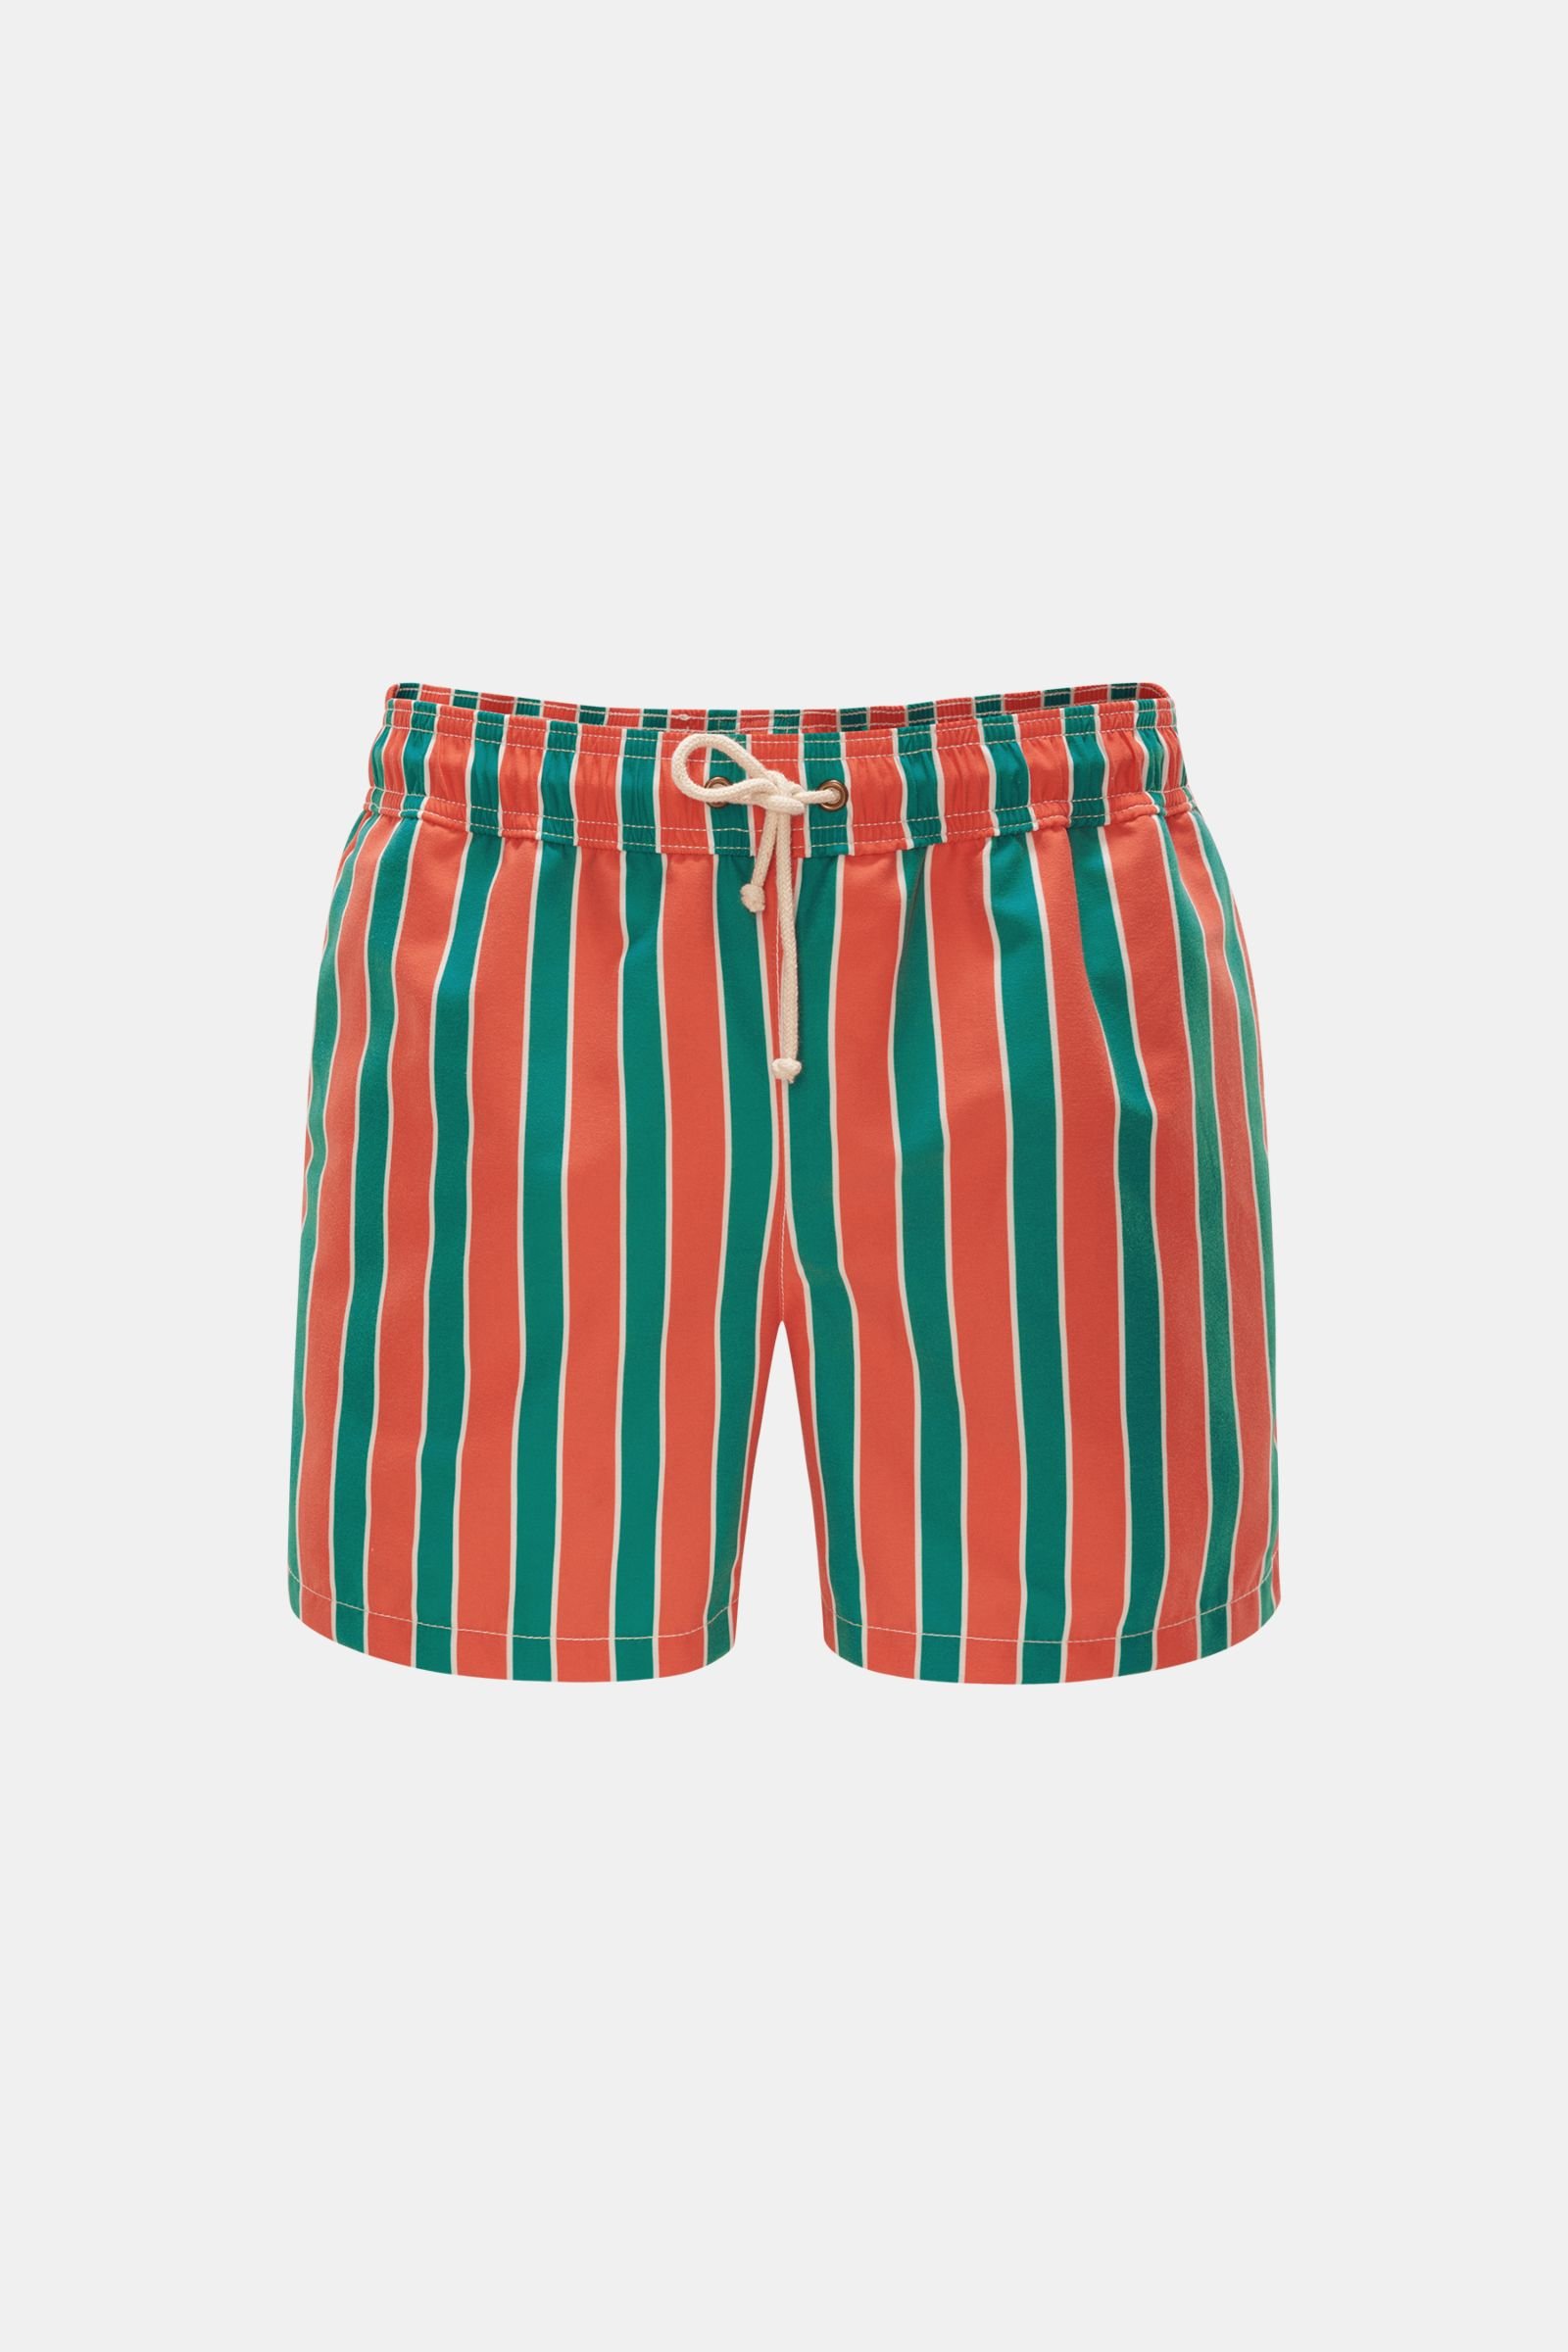 Swim shorts 'Monterosso' orange/green striped